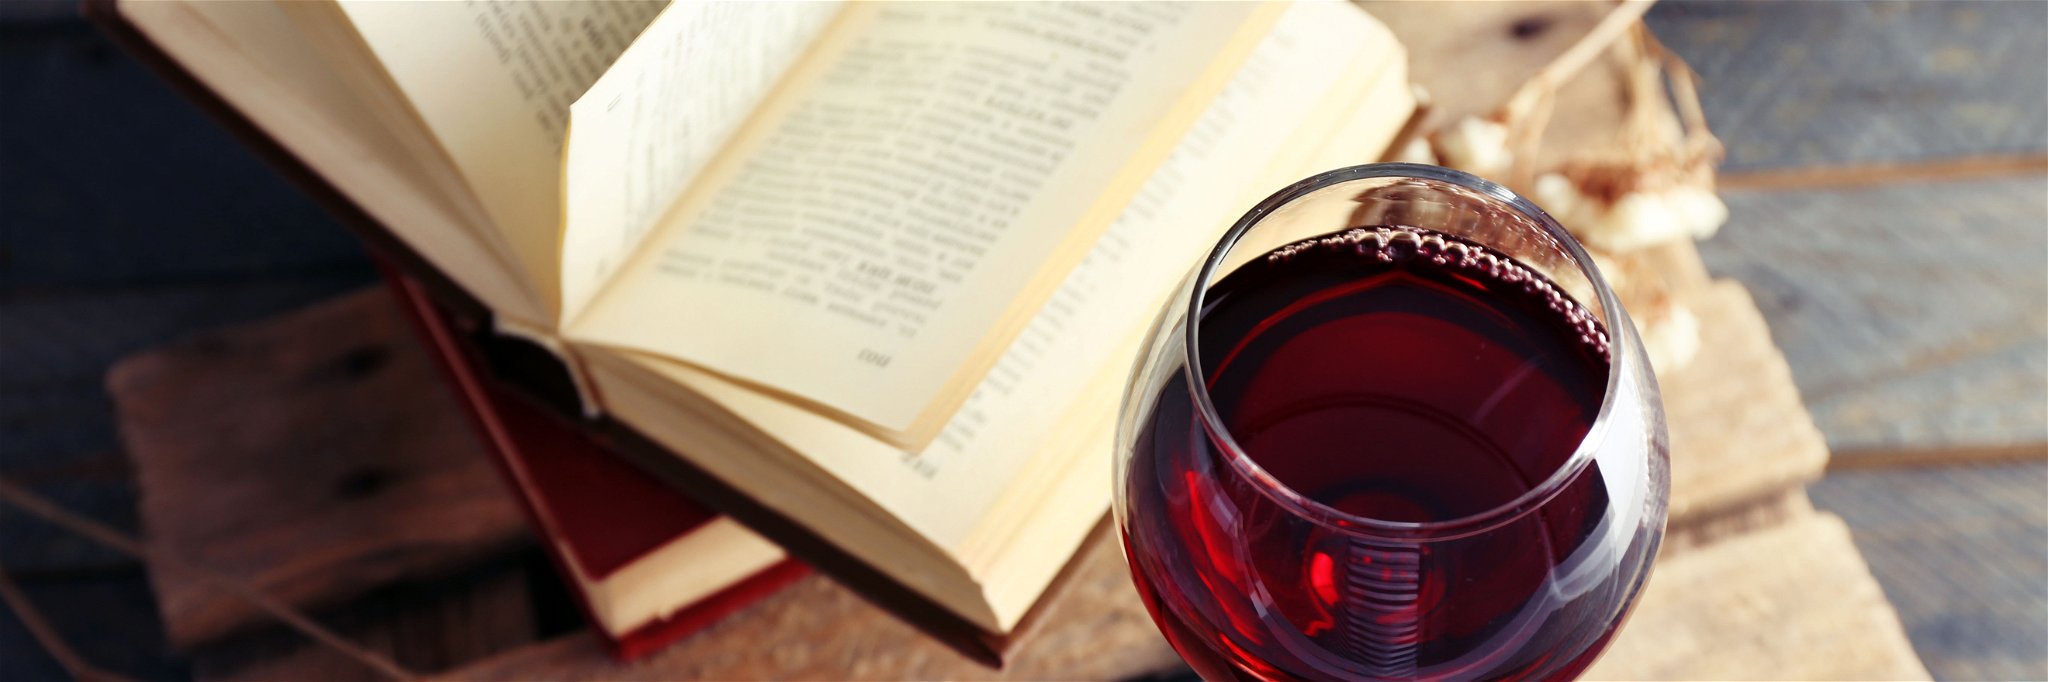 Delightful non-fiction books&nbsp;for wine lovers